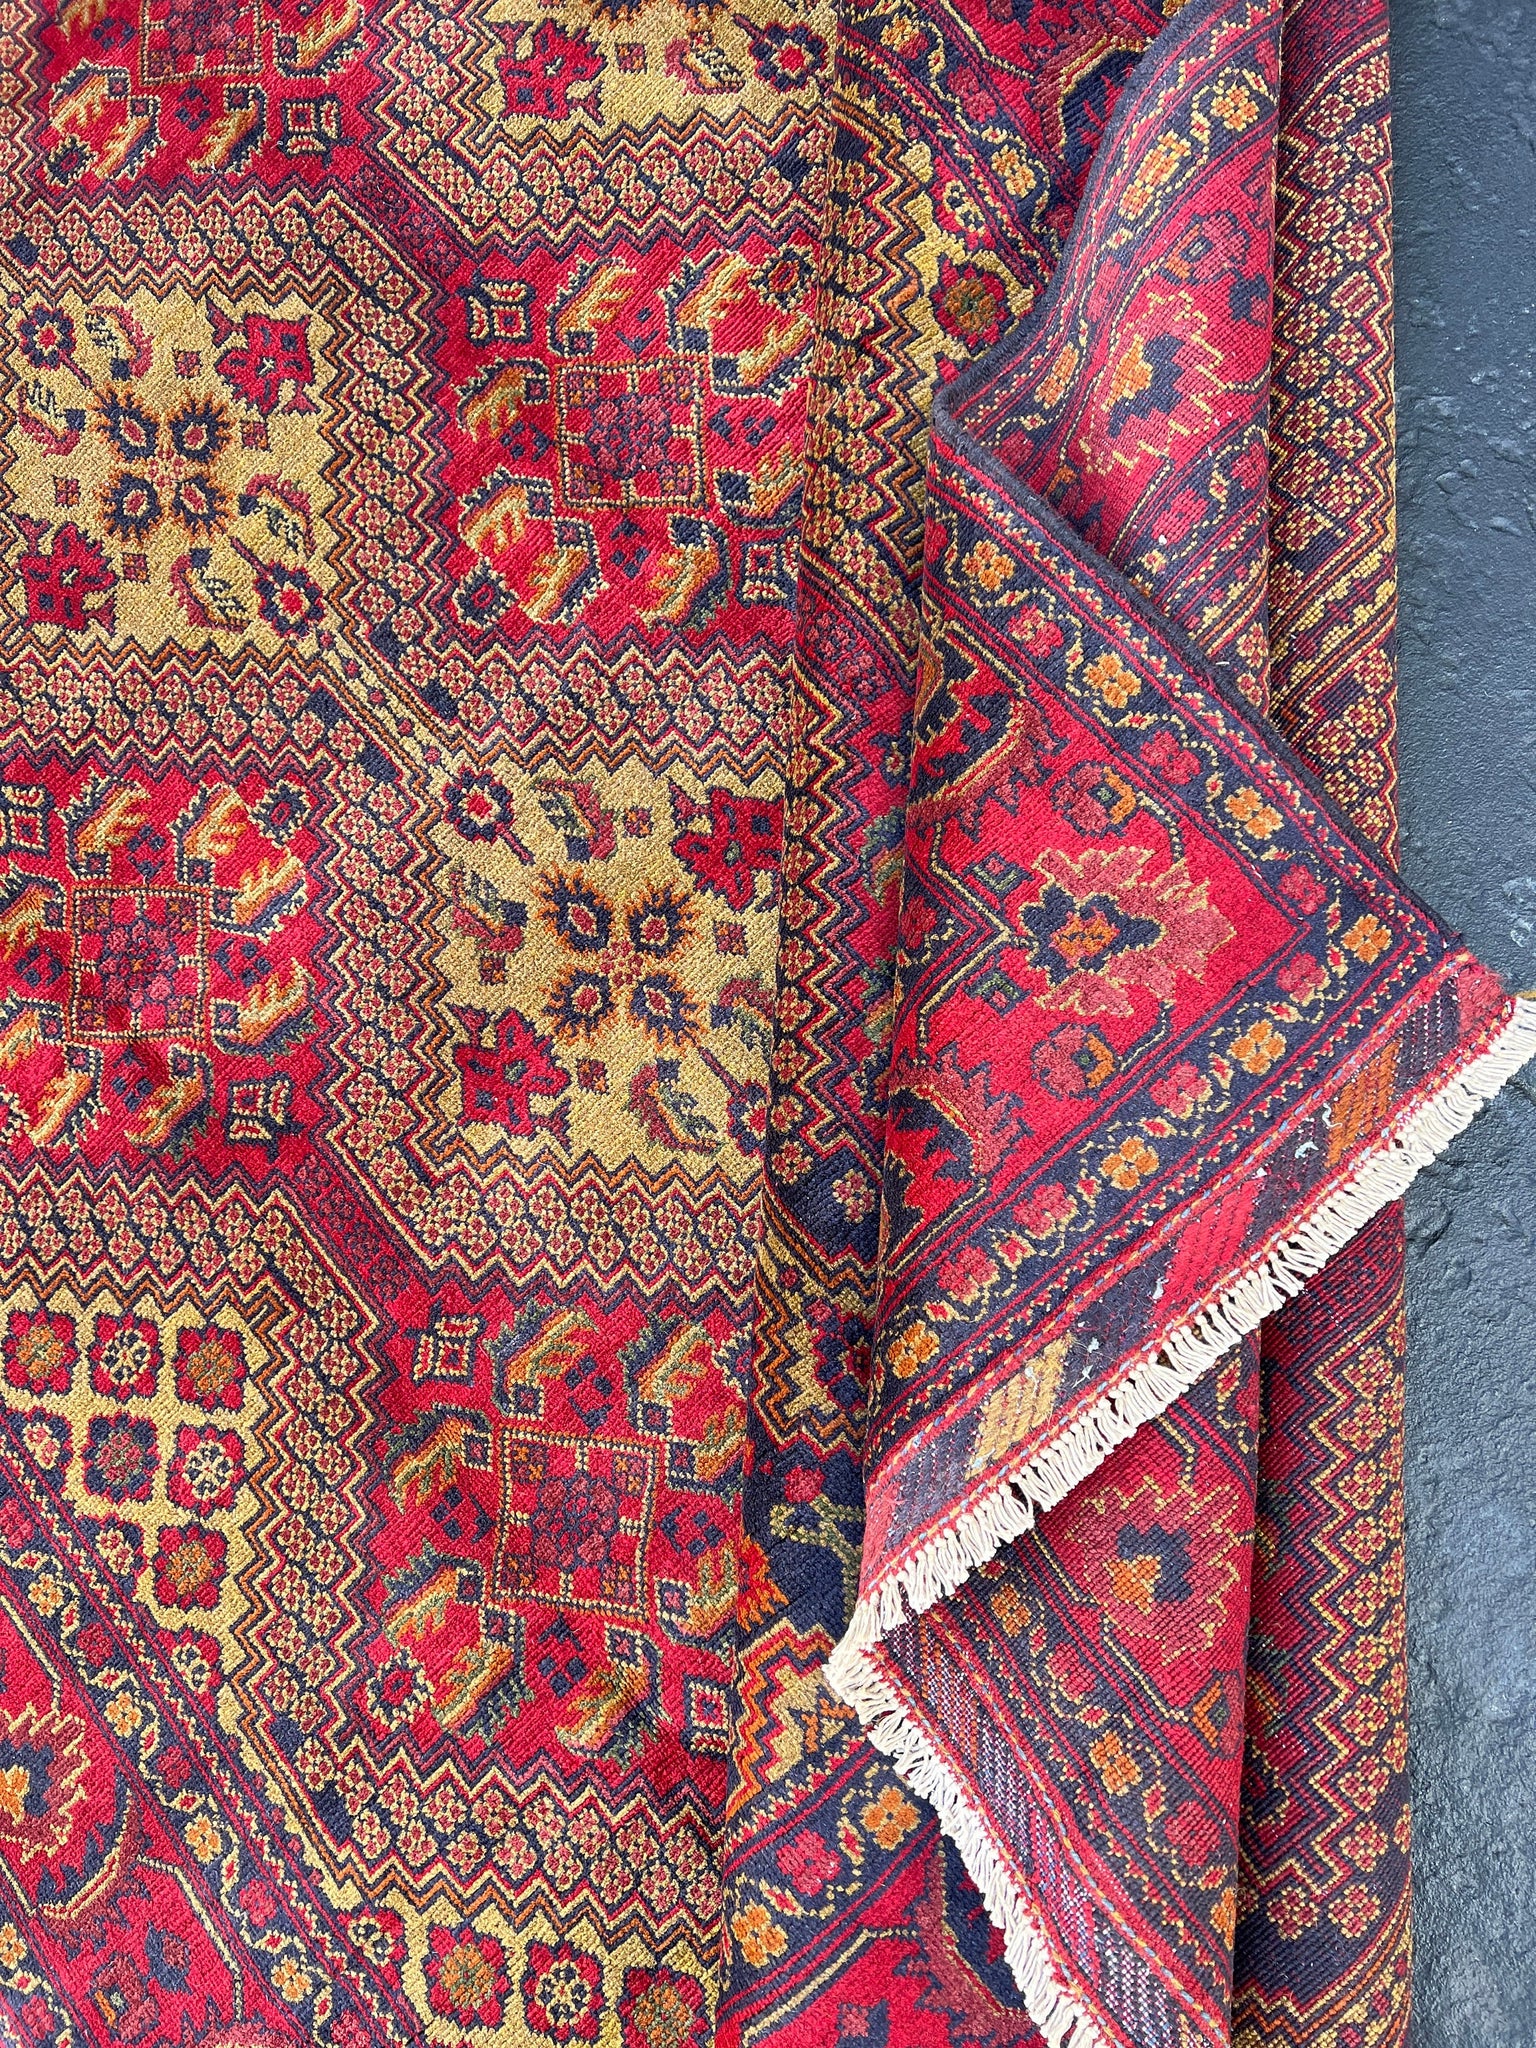 7x10 (215x305) Handmade Afghan Rug | Brick Red Midnight Blue Orange Moss Green Cream Beige Olive Green Blush Pink | Khal Mohammadi Wool Boho